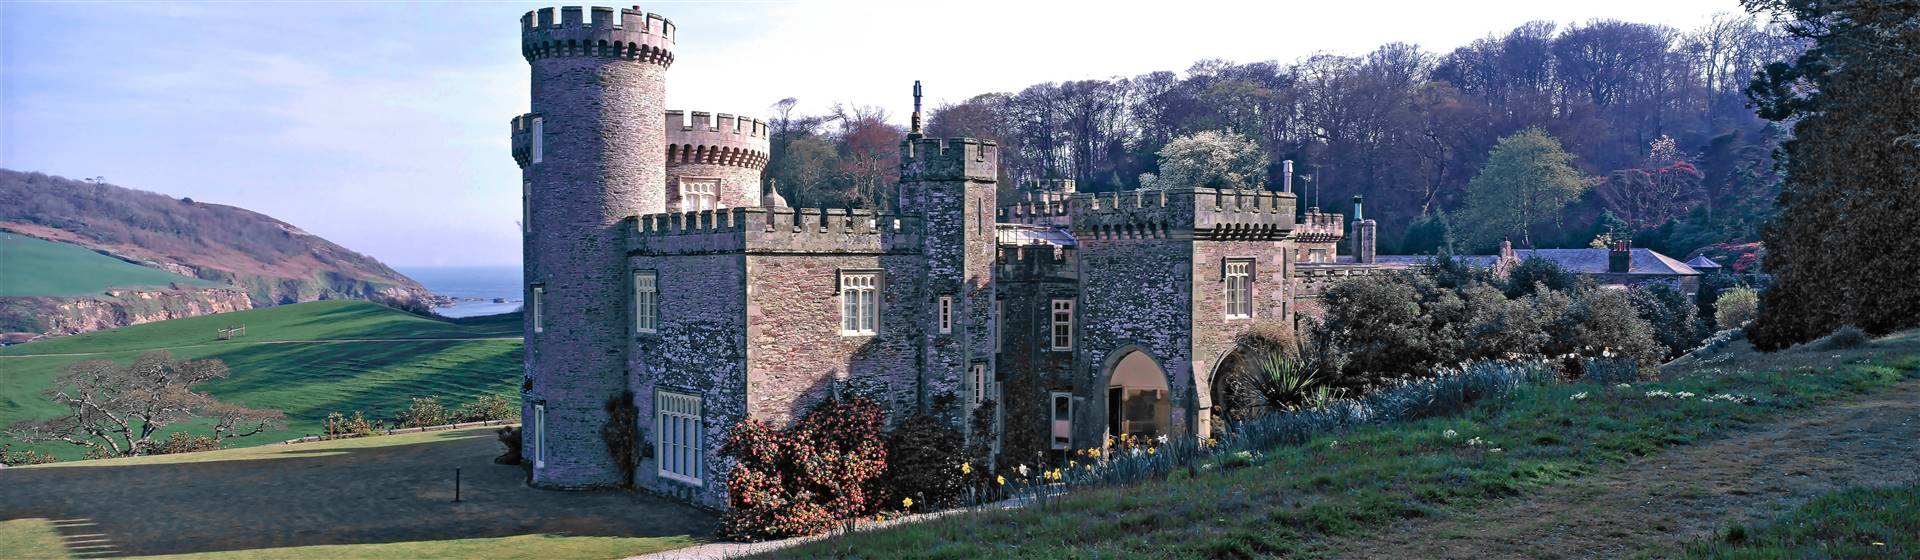 <img src="caerhays_castle©shutterstock.jpeg" alt="Caerhays Castle"/>